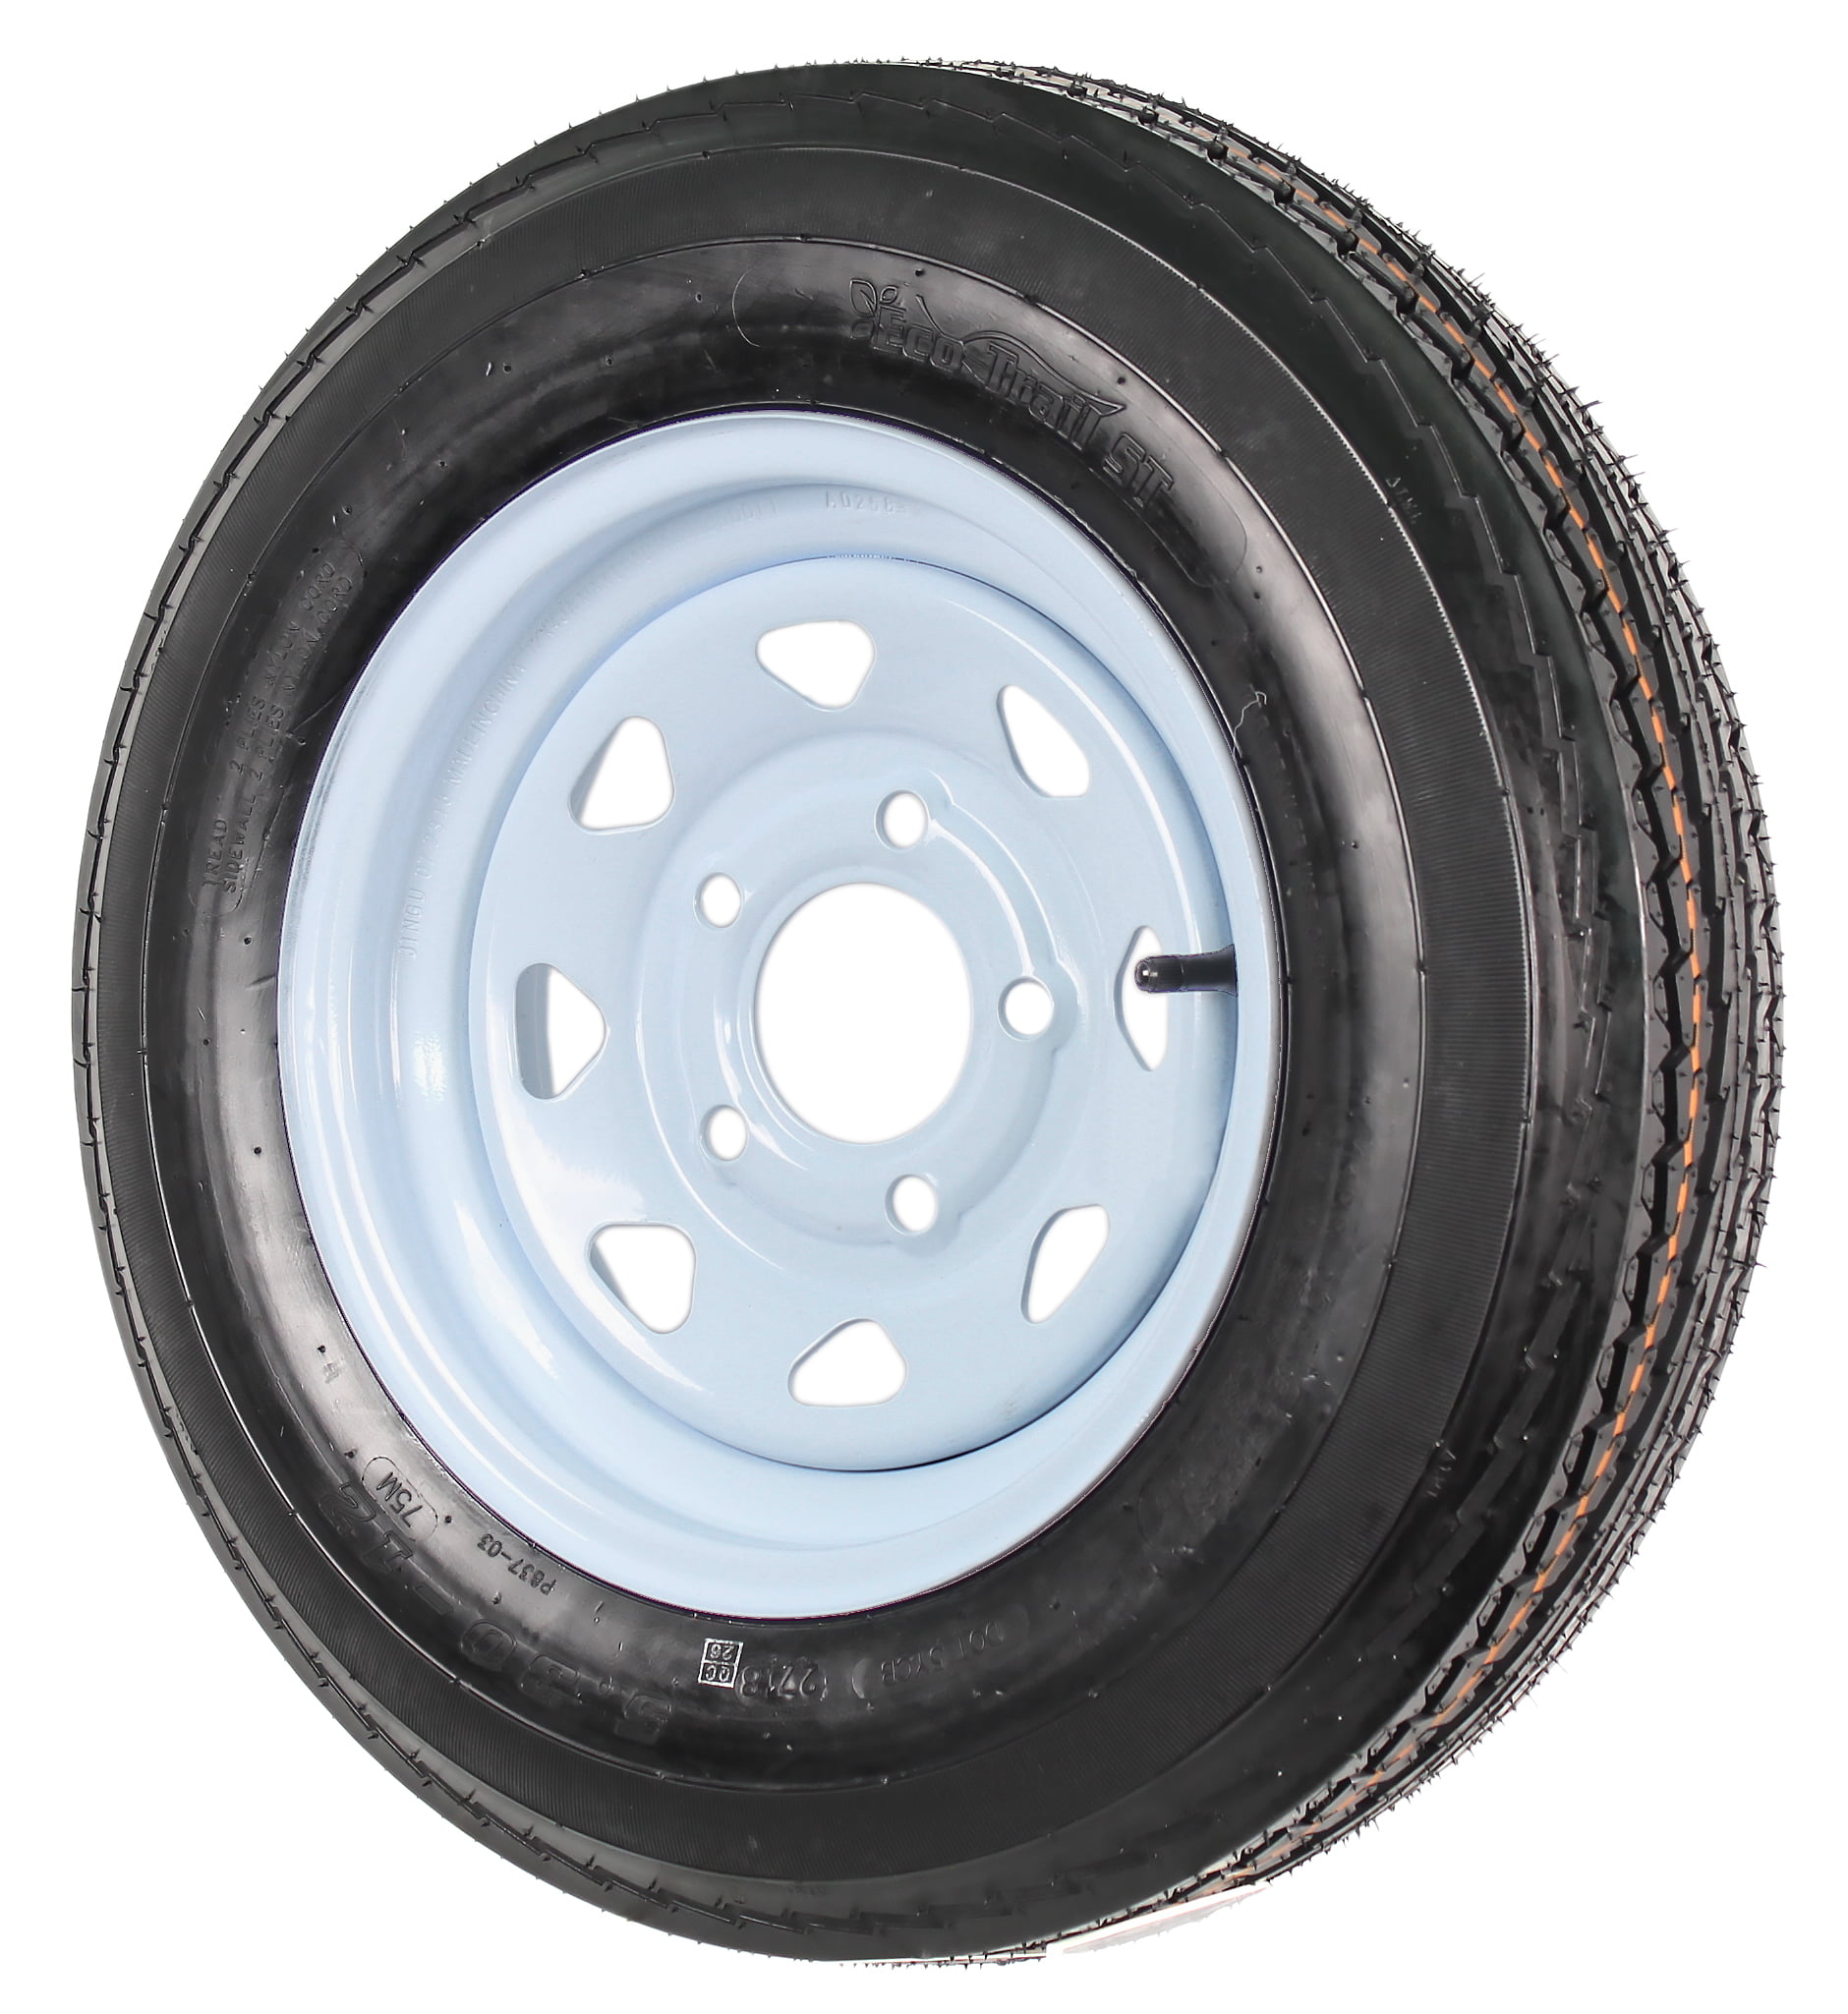 LoadStar 5-hole 12 x4 Red & Blue Pin Stripe White Spoke Trailer Wheel and Tire 5.30-12 6PLY